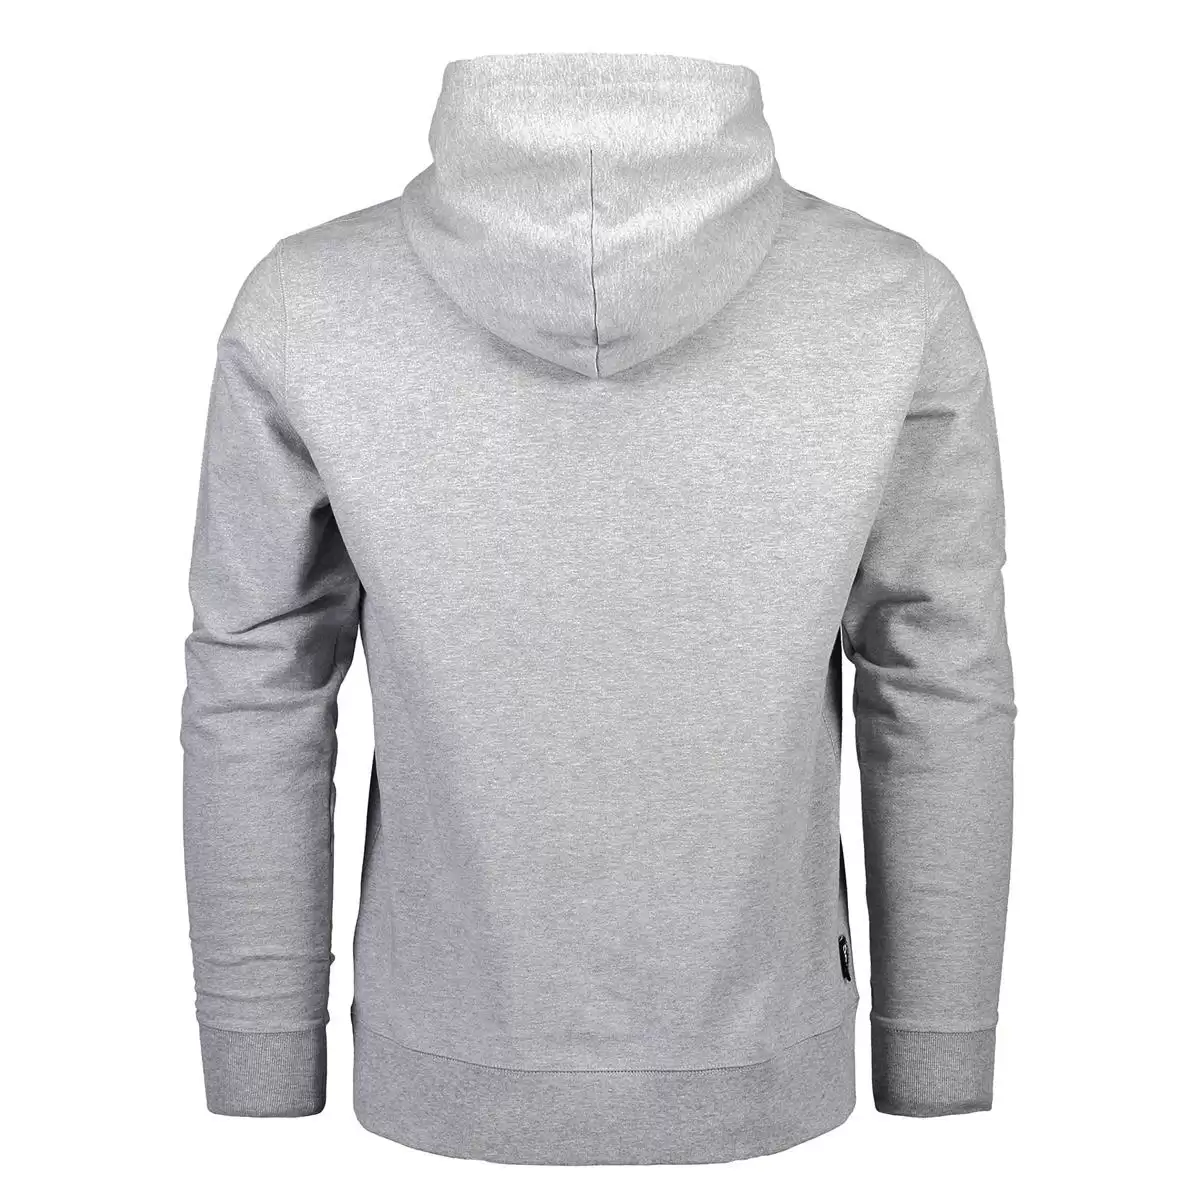 Hood grey Size XS #1